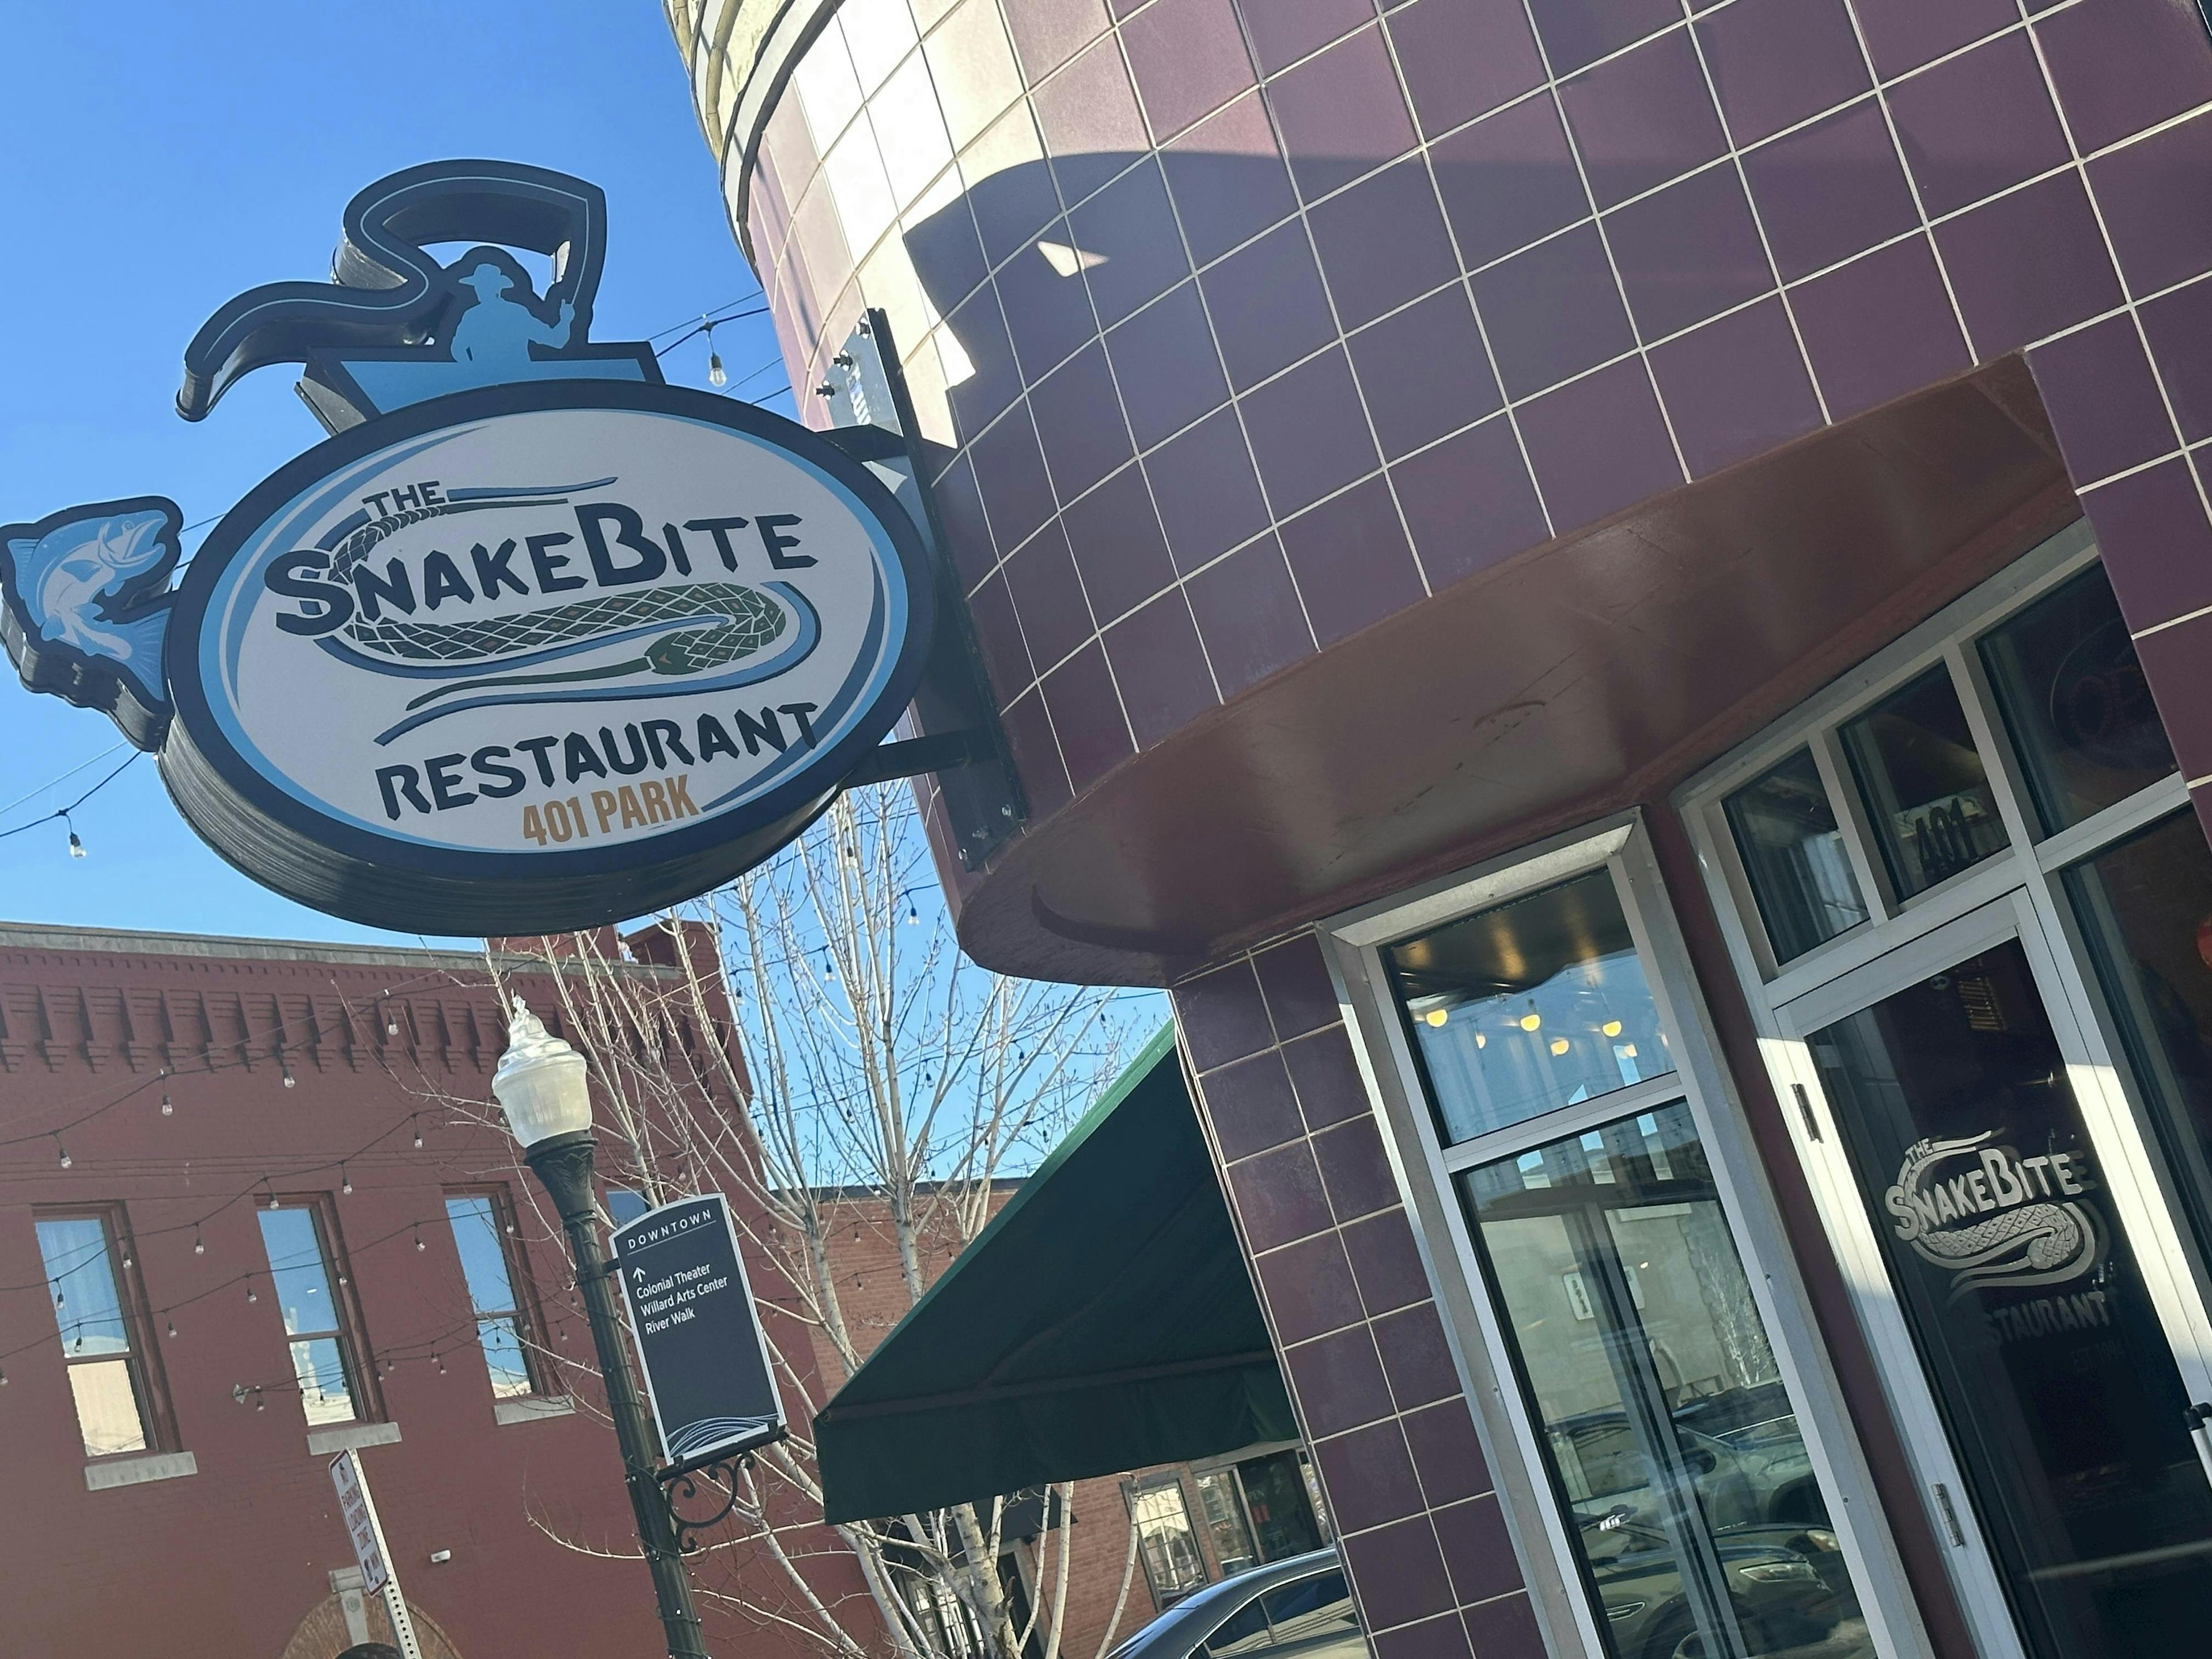 The Snakebite Restaurant in downtown Idaho Falls, Idaho.